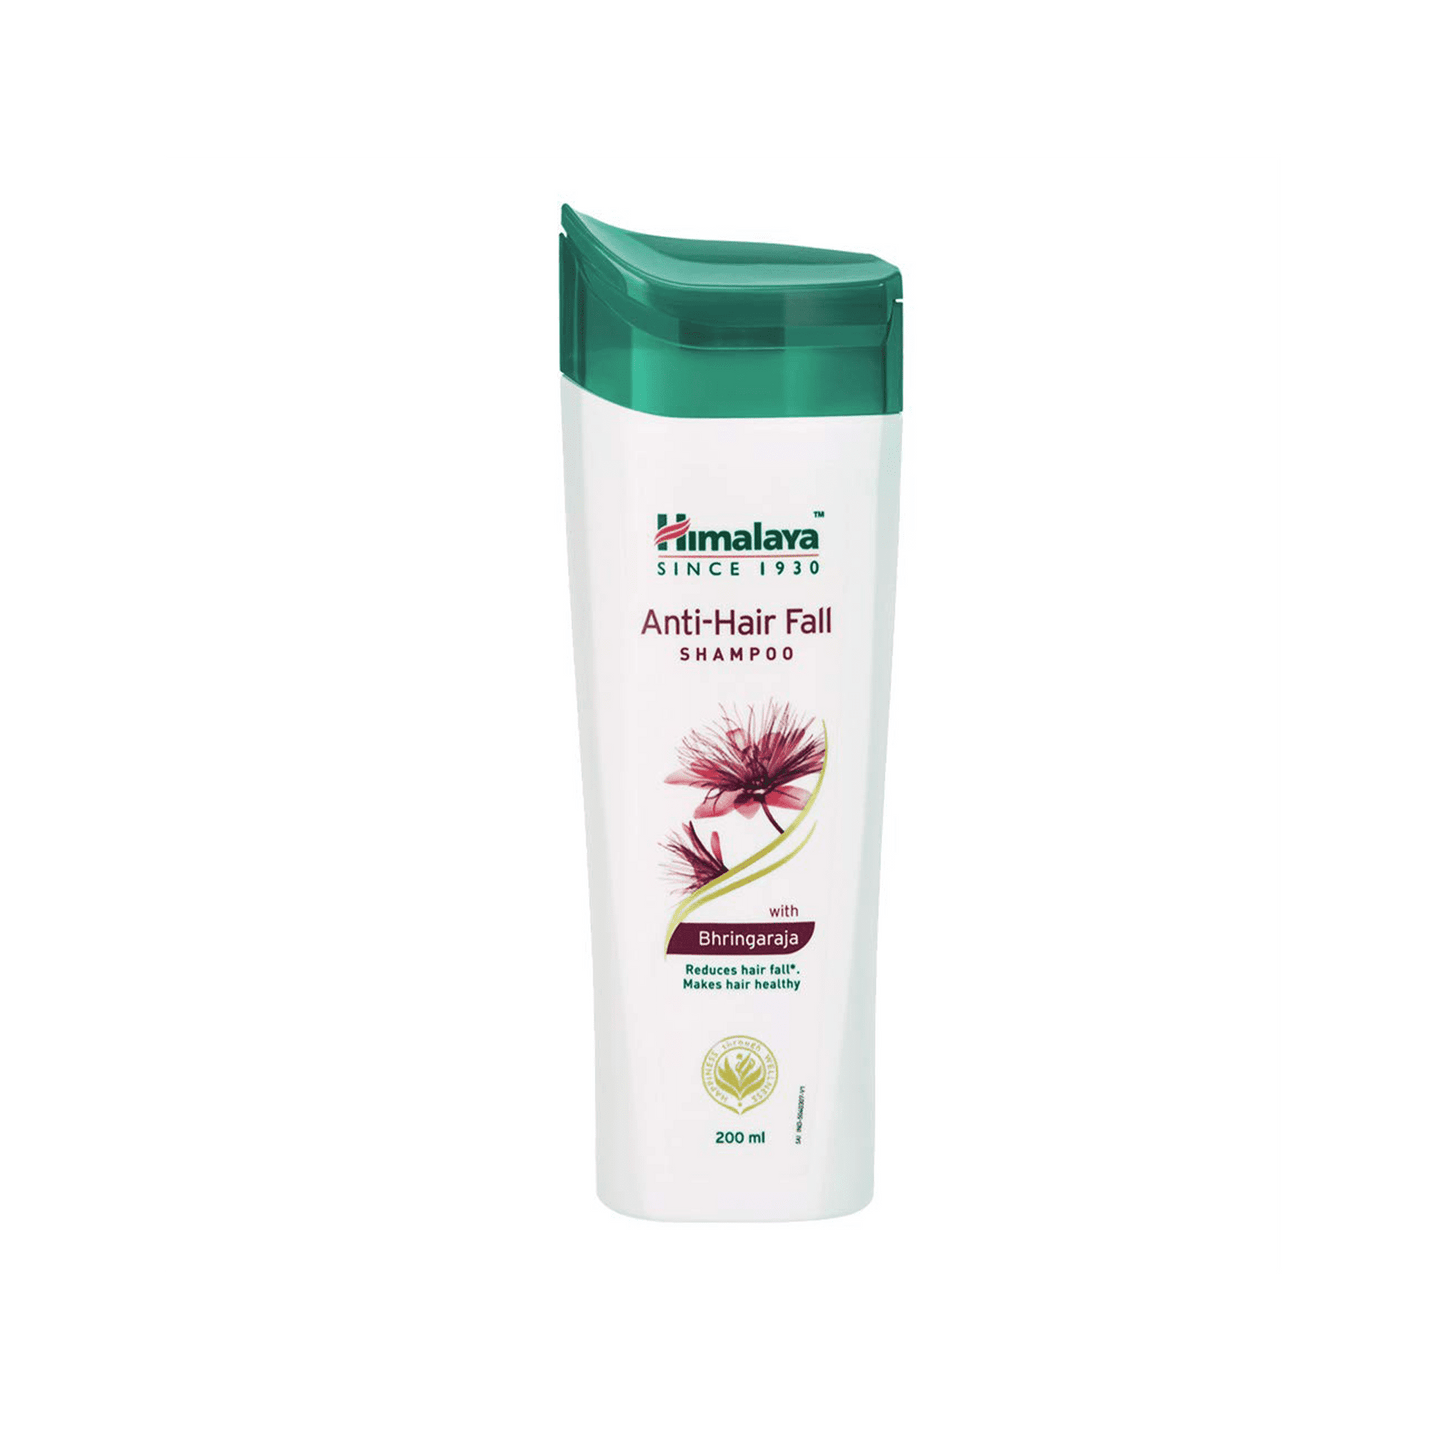 Himalaya Anti-Hairfall Shampoo.